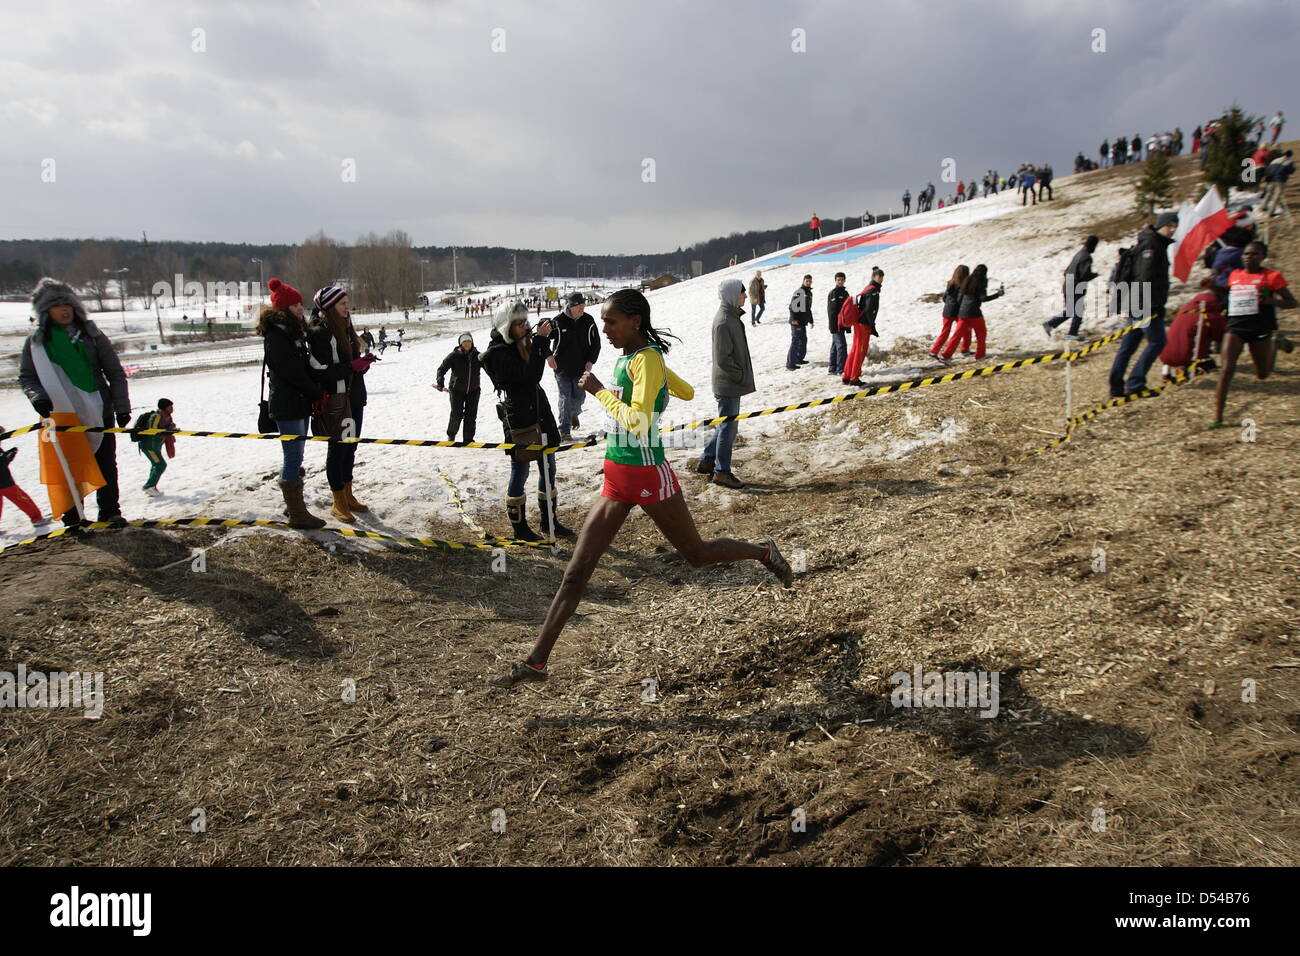 Bydgoszcz, Poland 24th, March 2013 IAAF World Cross Country Chamiponships. Senior Race Woman. Stock Photo